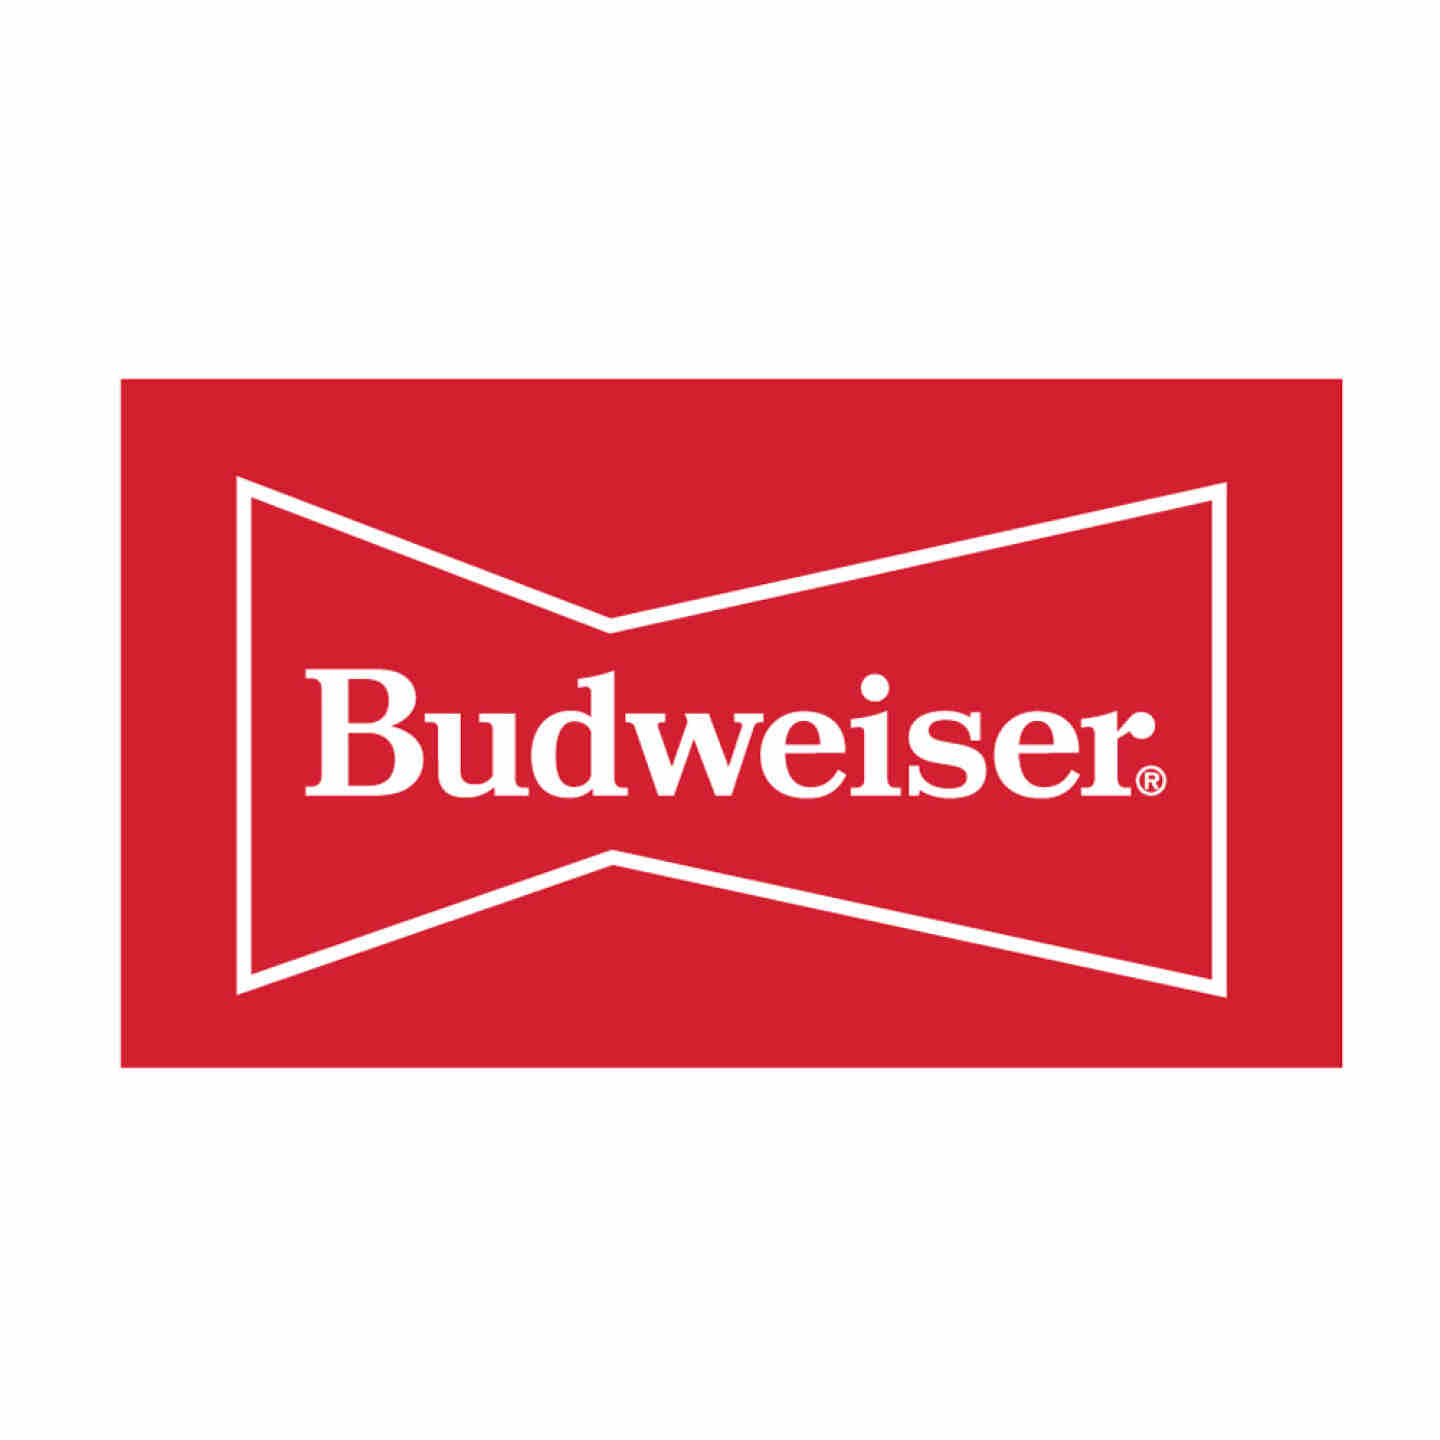 Budweiser Image 1